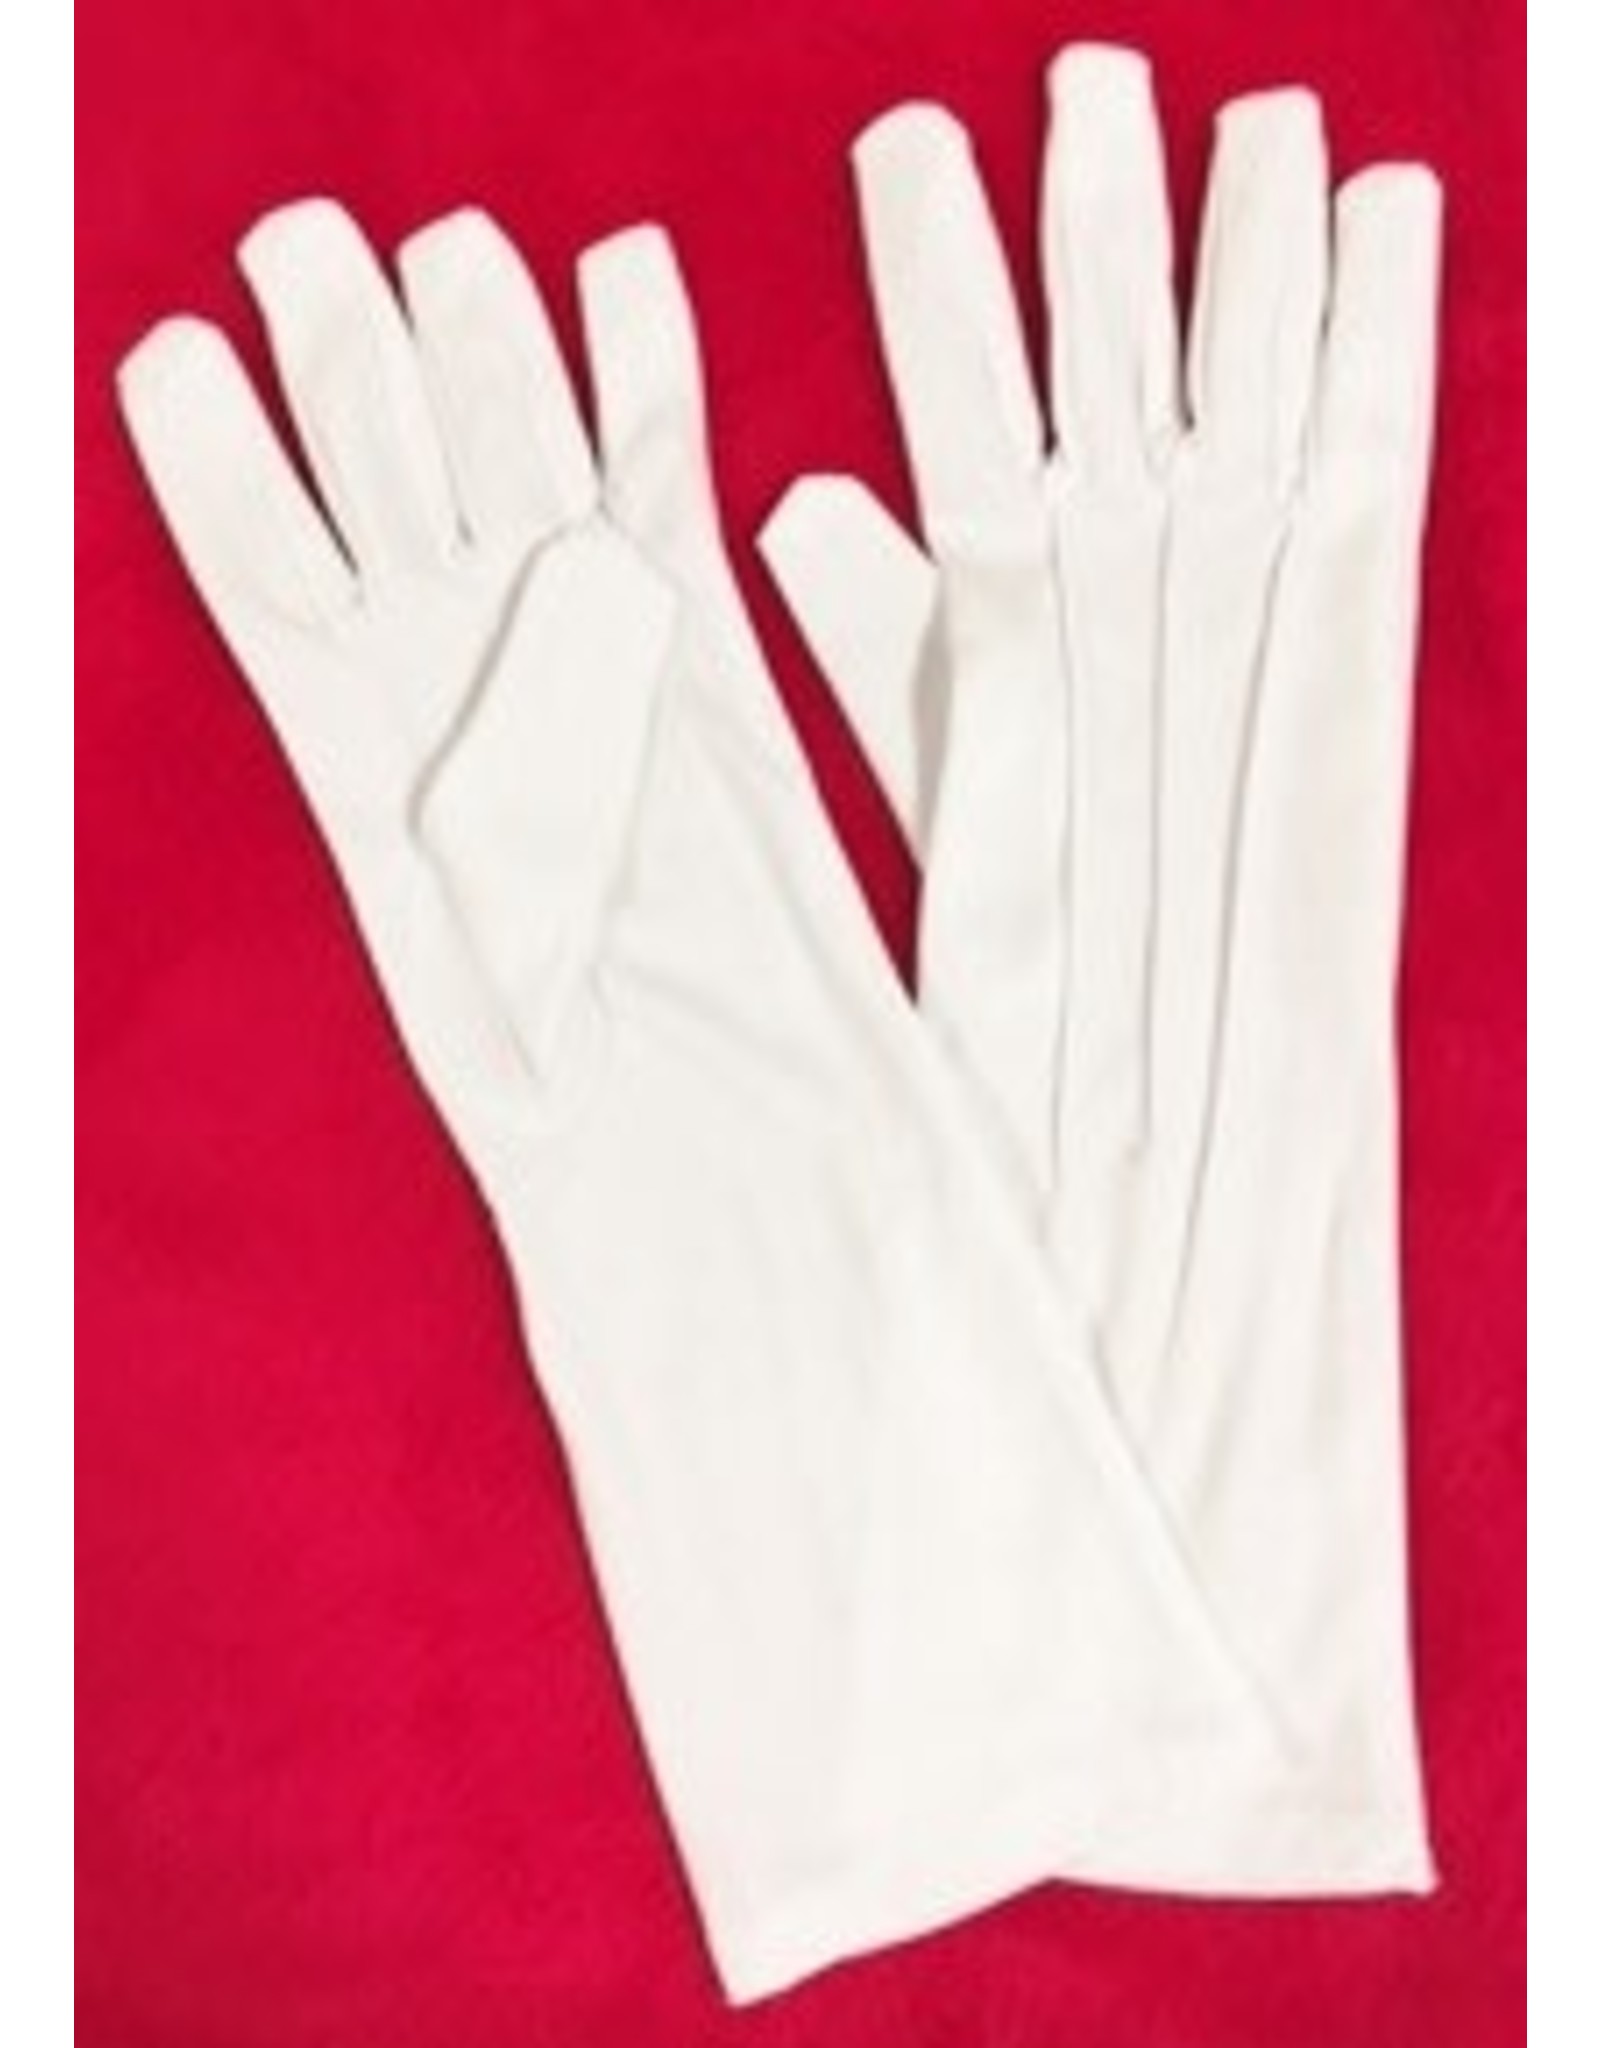 Halco Santa Suits Long Nylon Gloves